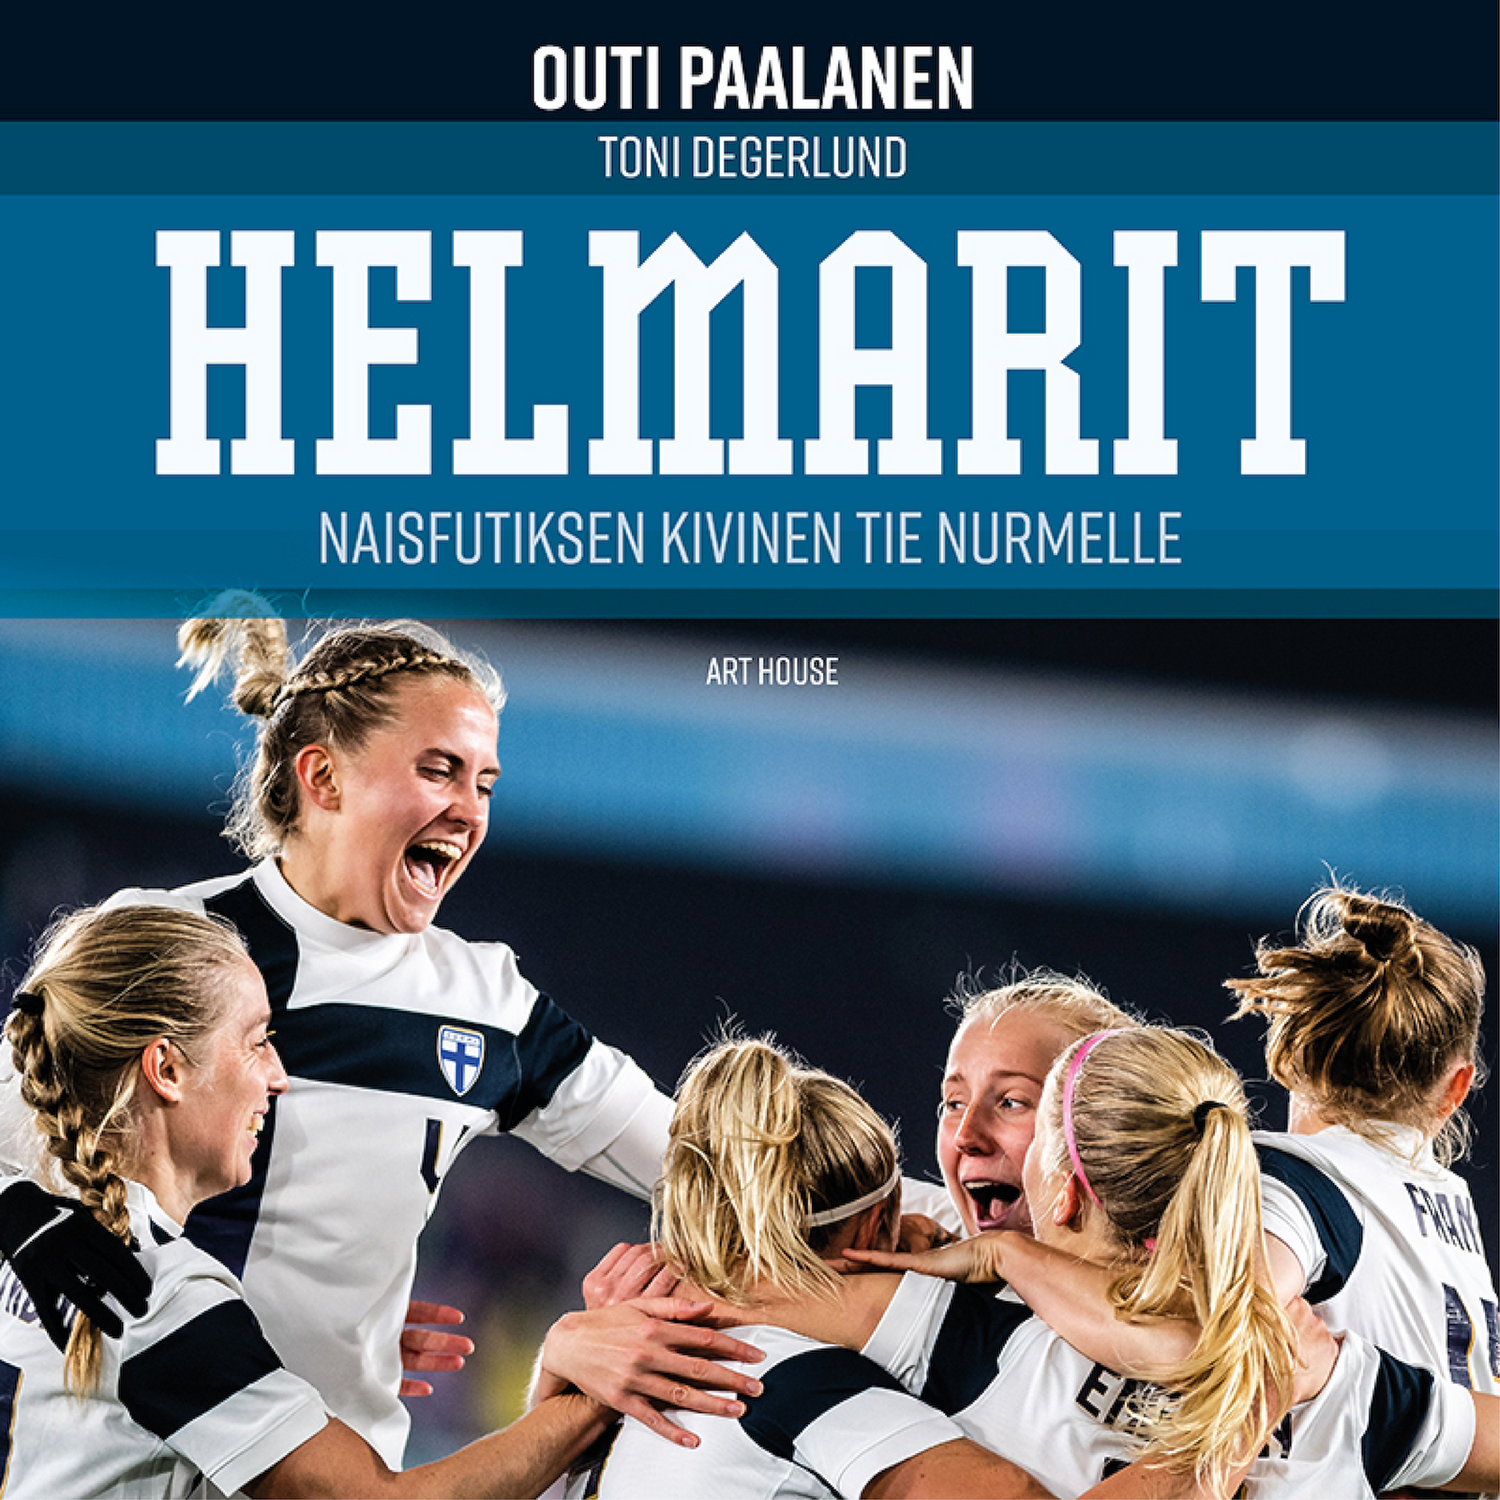 Helmarit - Women Soccer's Rocky Road to the Grass Book